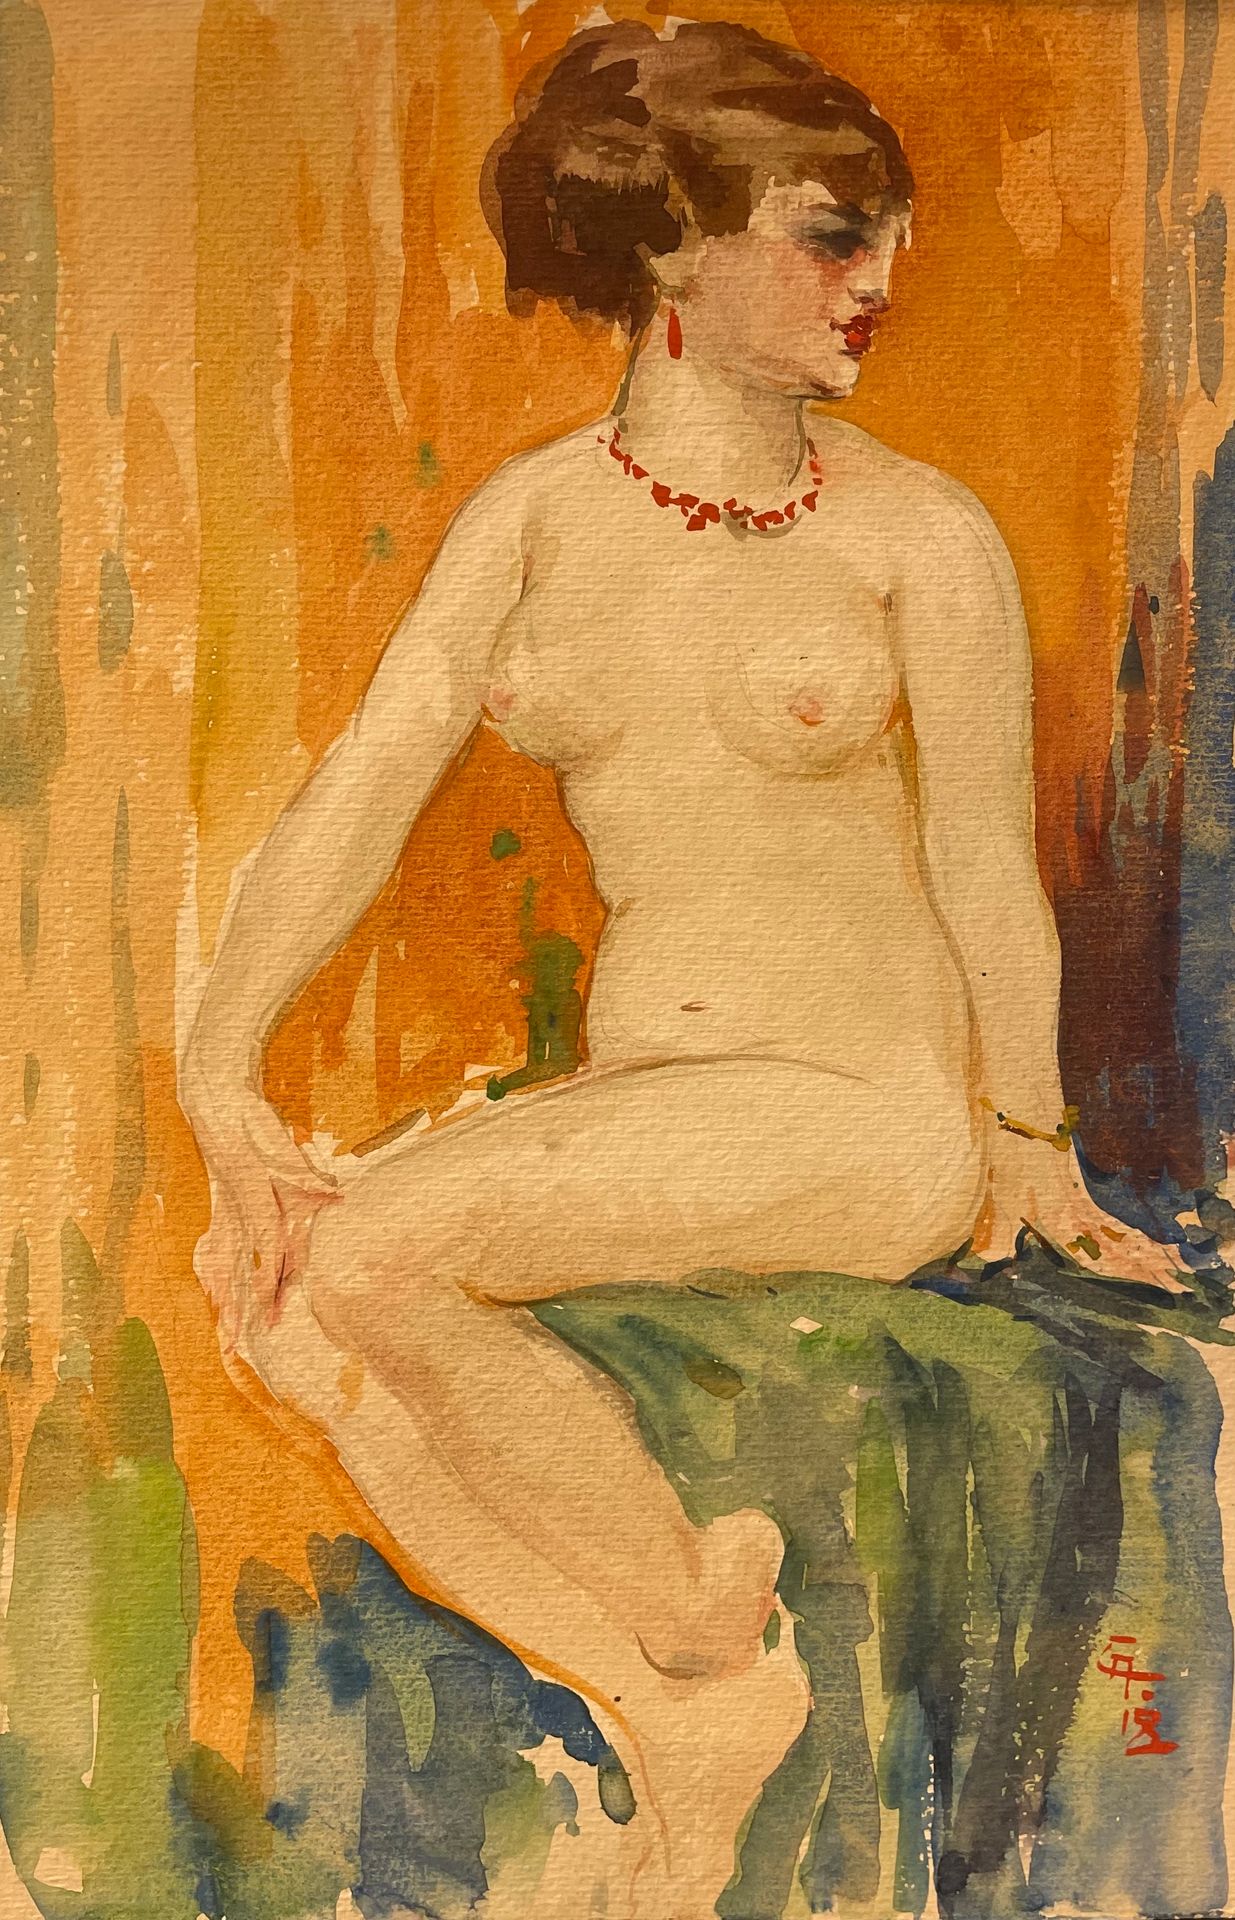 ANTO-CARTE. "戴红领子的裸体"（1918年）。纸上水粉和水彩画，右下角有日期和签名。支持物和主题的尺寸：28,5 x 19厘米。